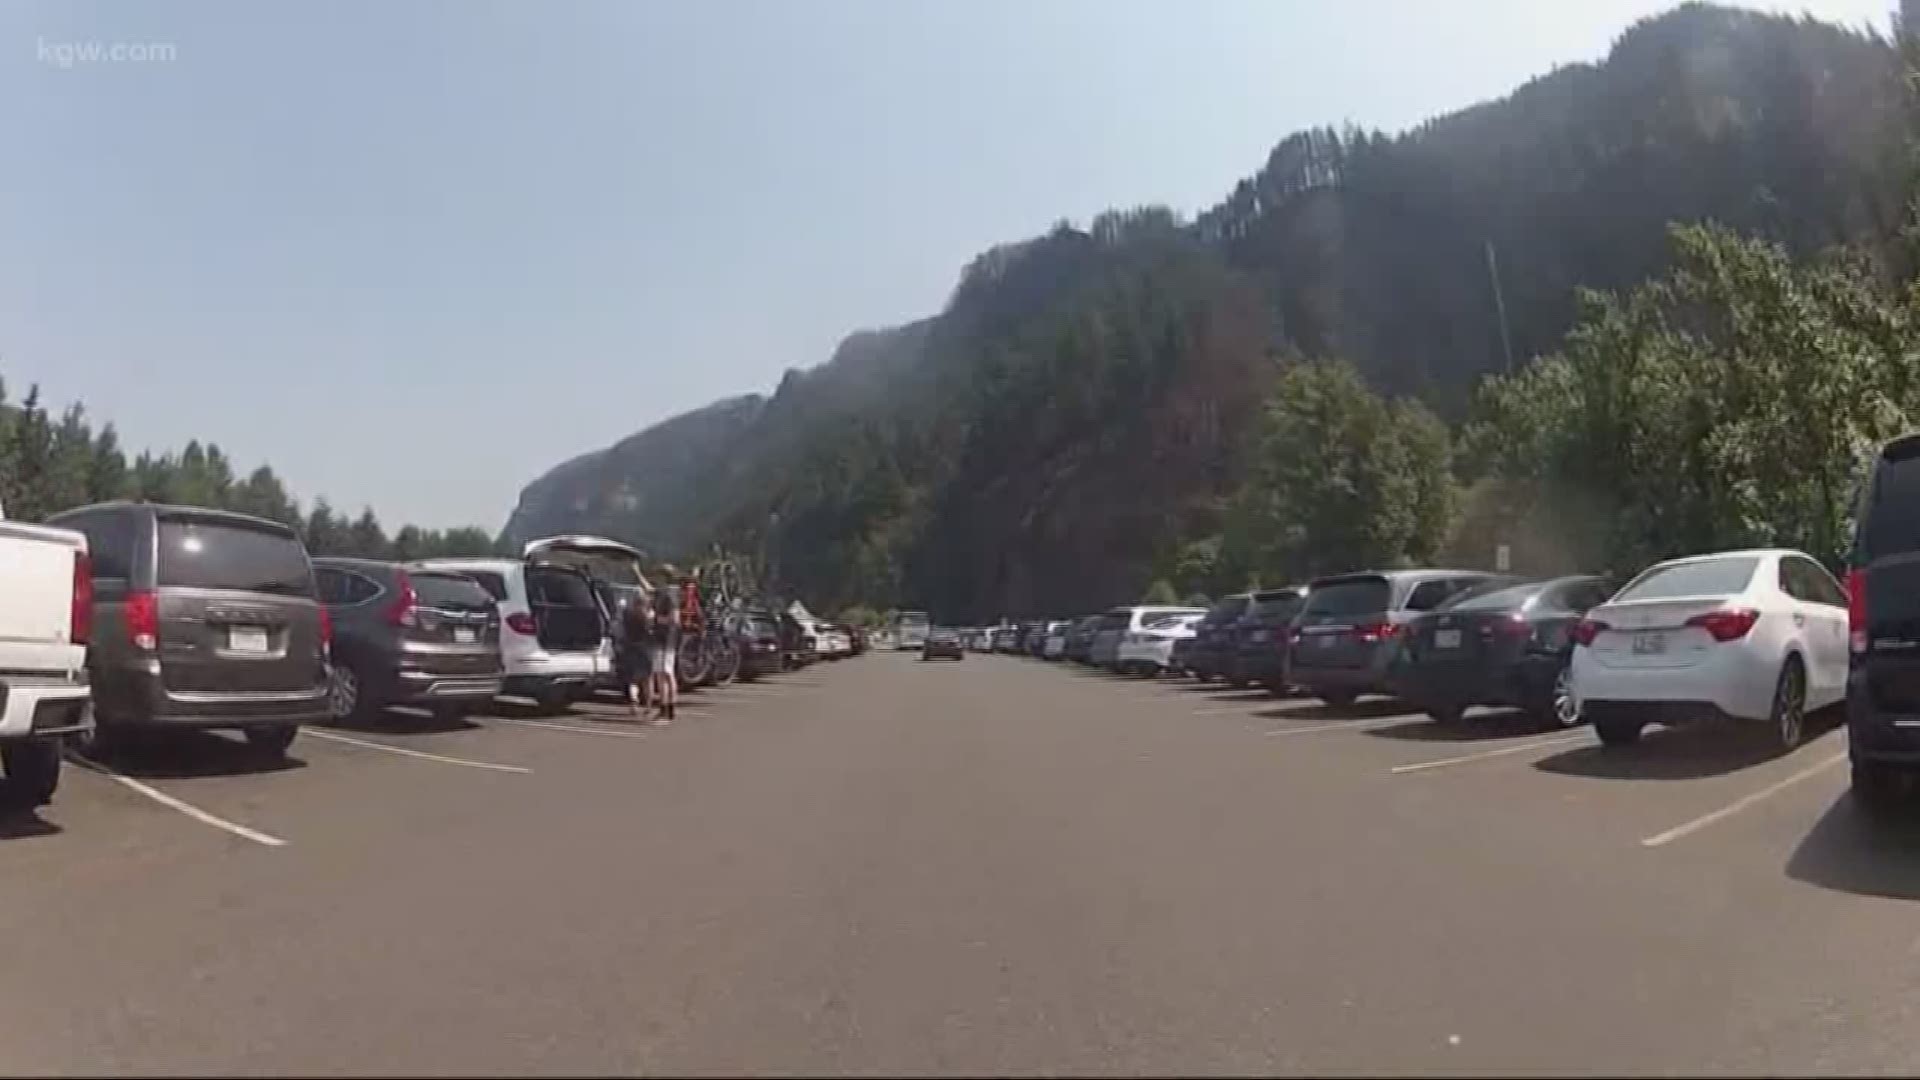 Parking problems at popular Multnomah Falls.